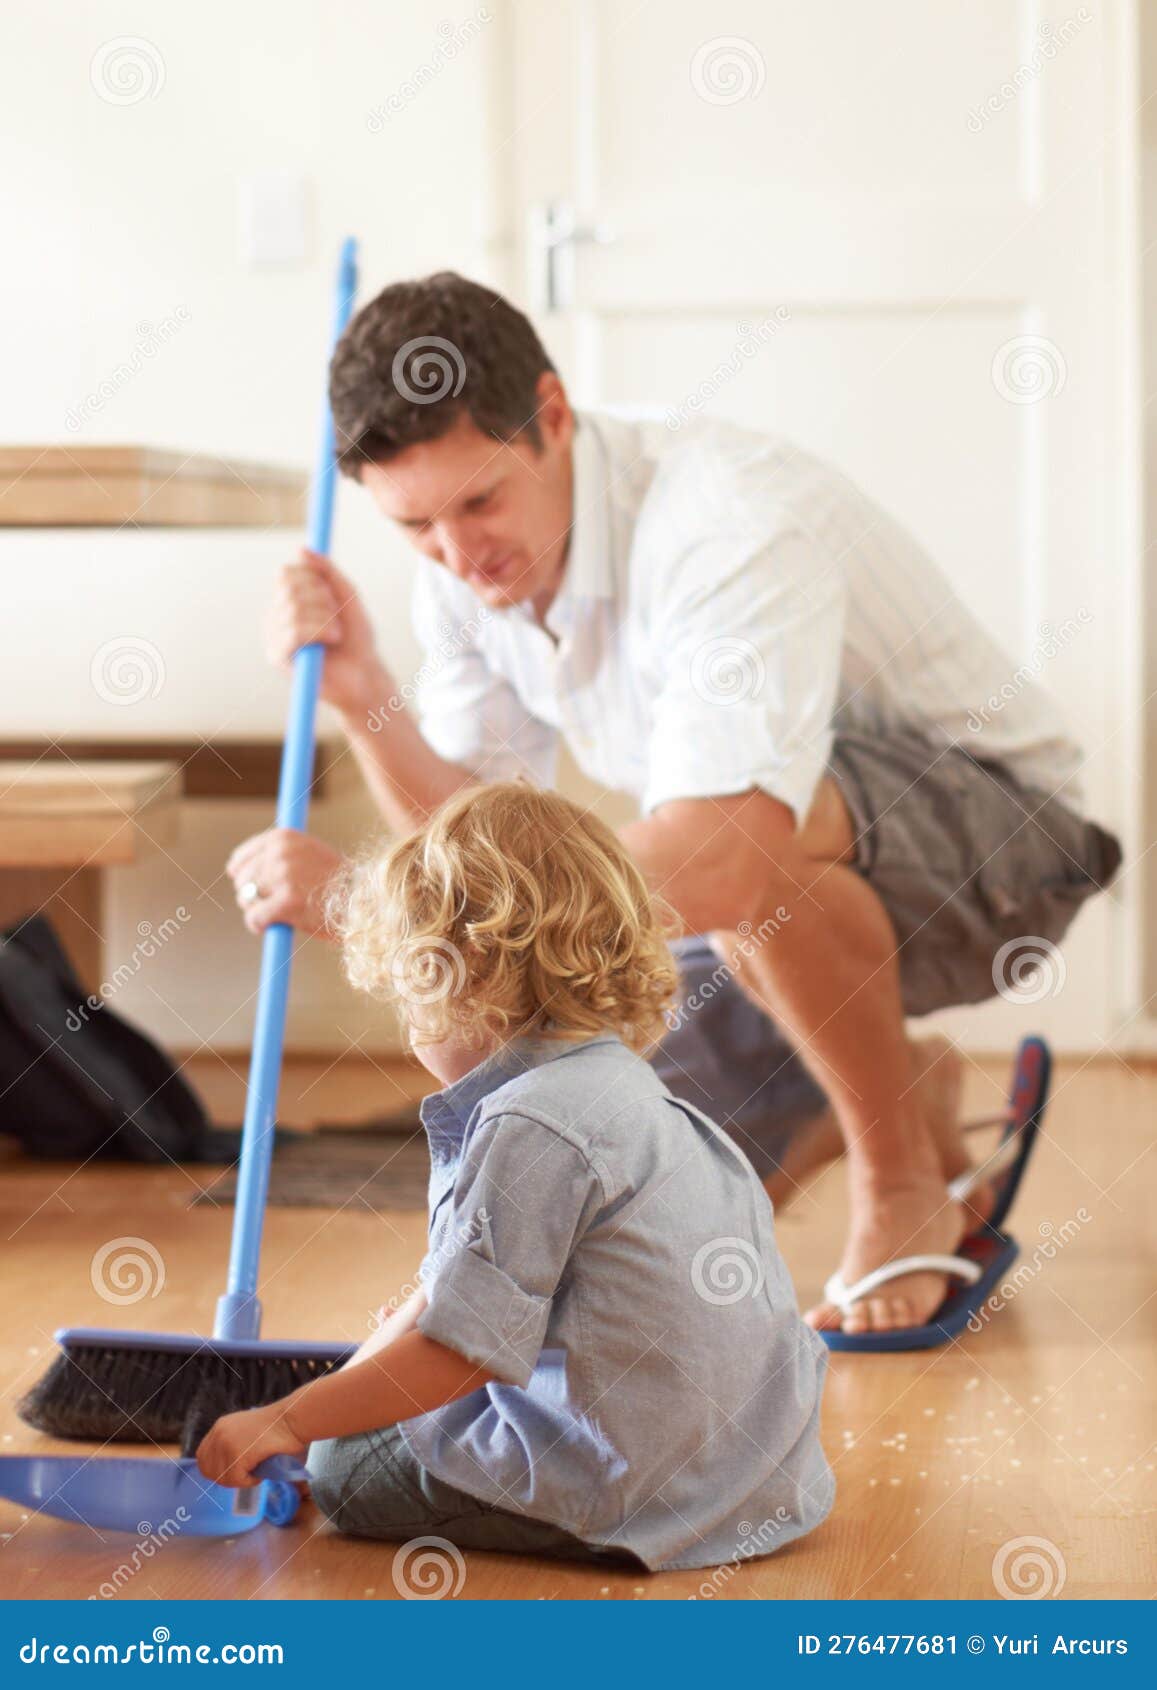 https://thumbs.dreamstime.com/z/man-sweeping-boy-kid-cleaning-broom-help-mess-floor-home-together-hygiene-chores-man-sweeping-276477681.jpg